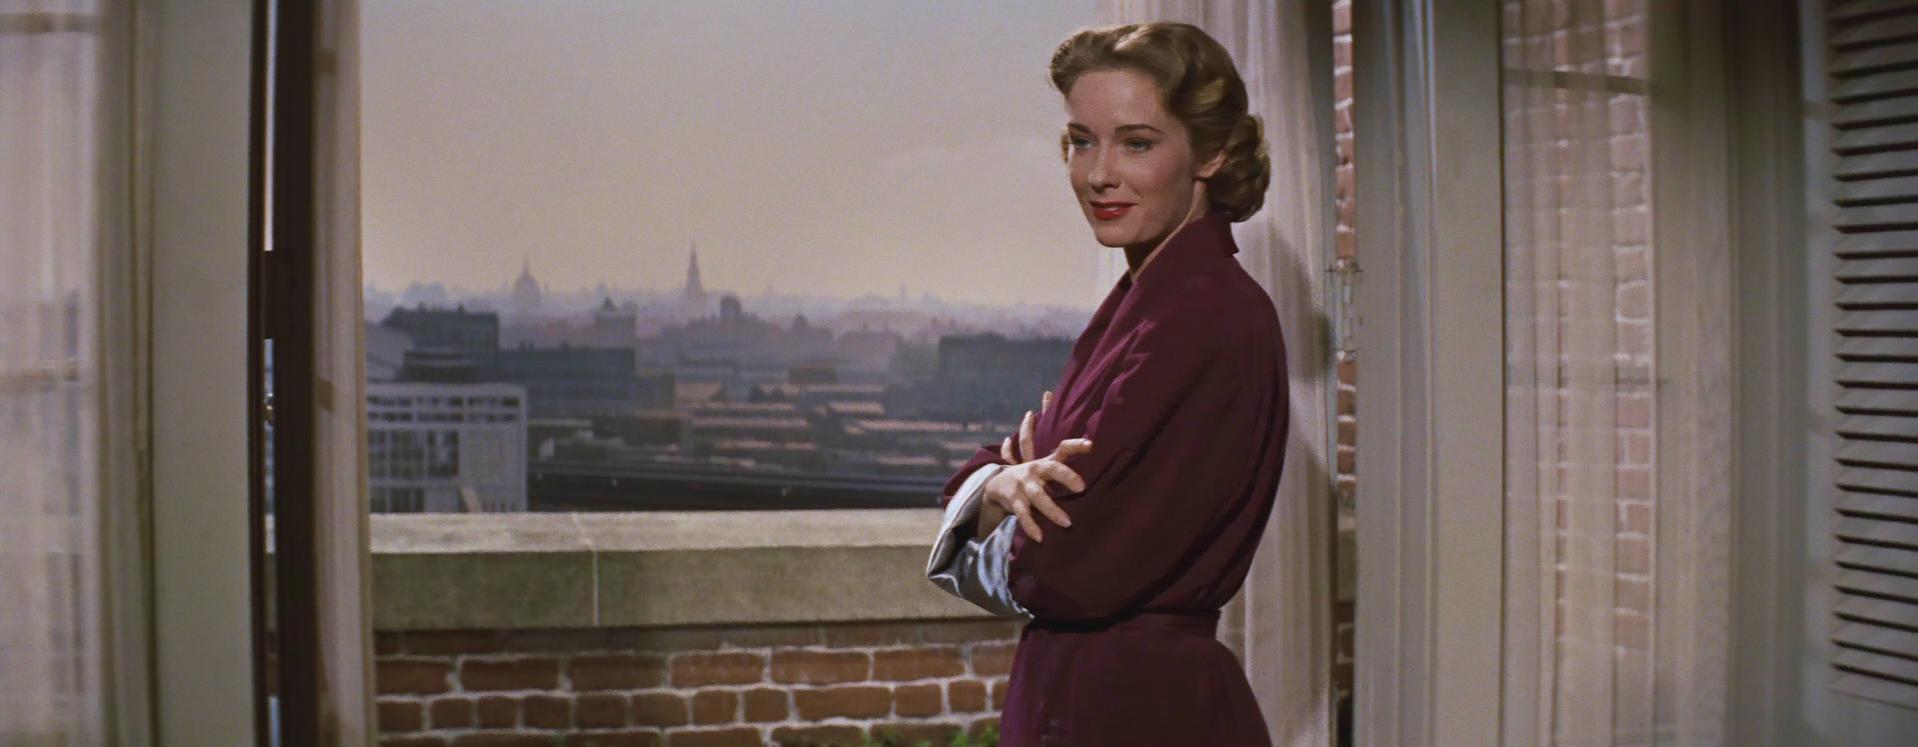 23 Paces to Baker Street (1956) Screenshot 2